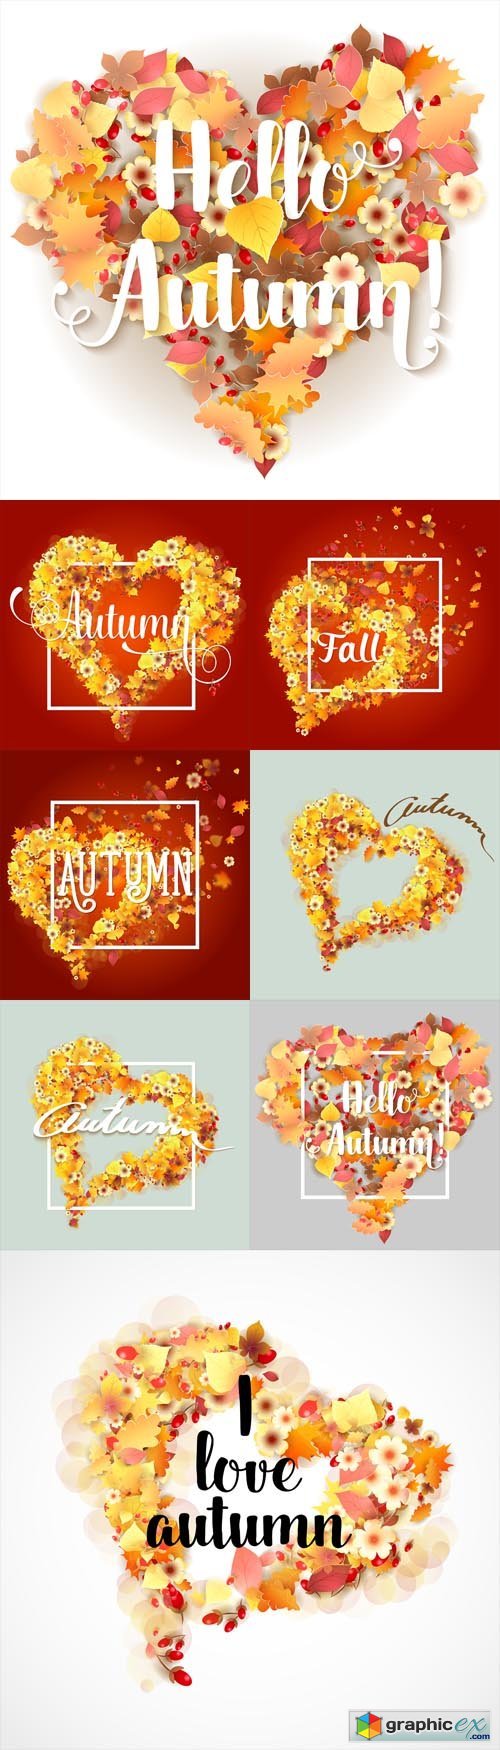 Autumn Frames in Shape of Heart